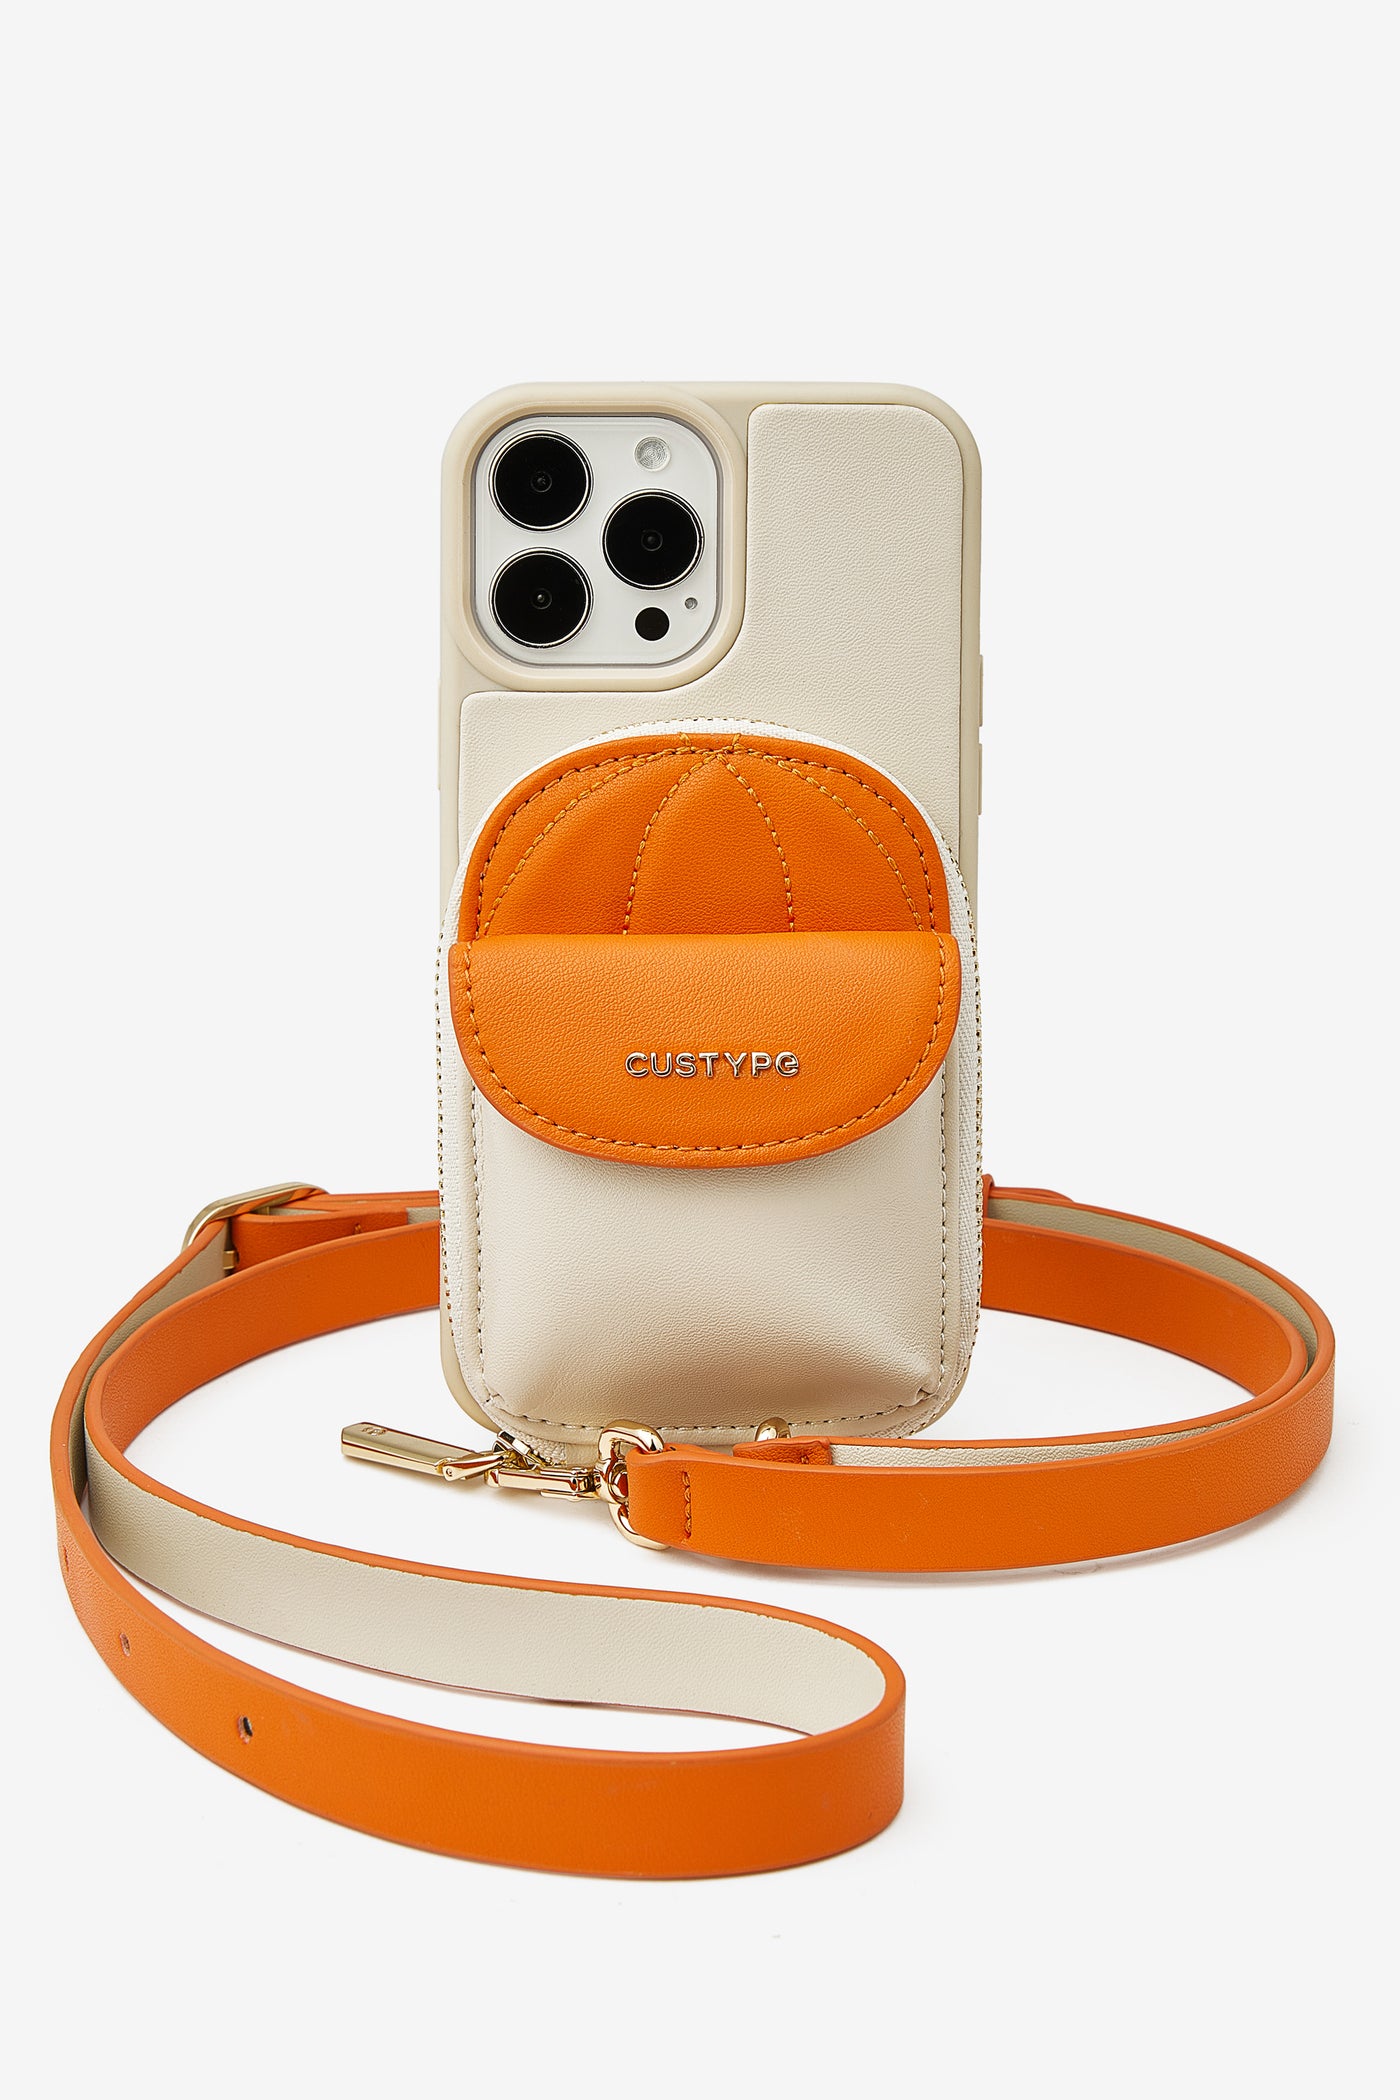 Unique Baseball Cap Phone Case iPhone Crossbody Cover Case Wallet Pouch orange